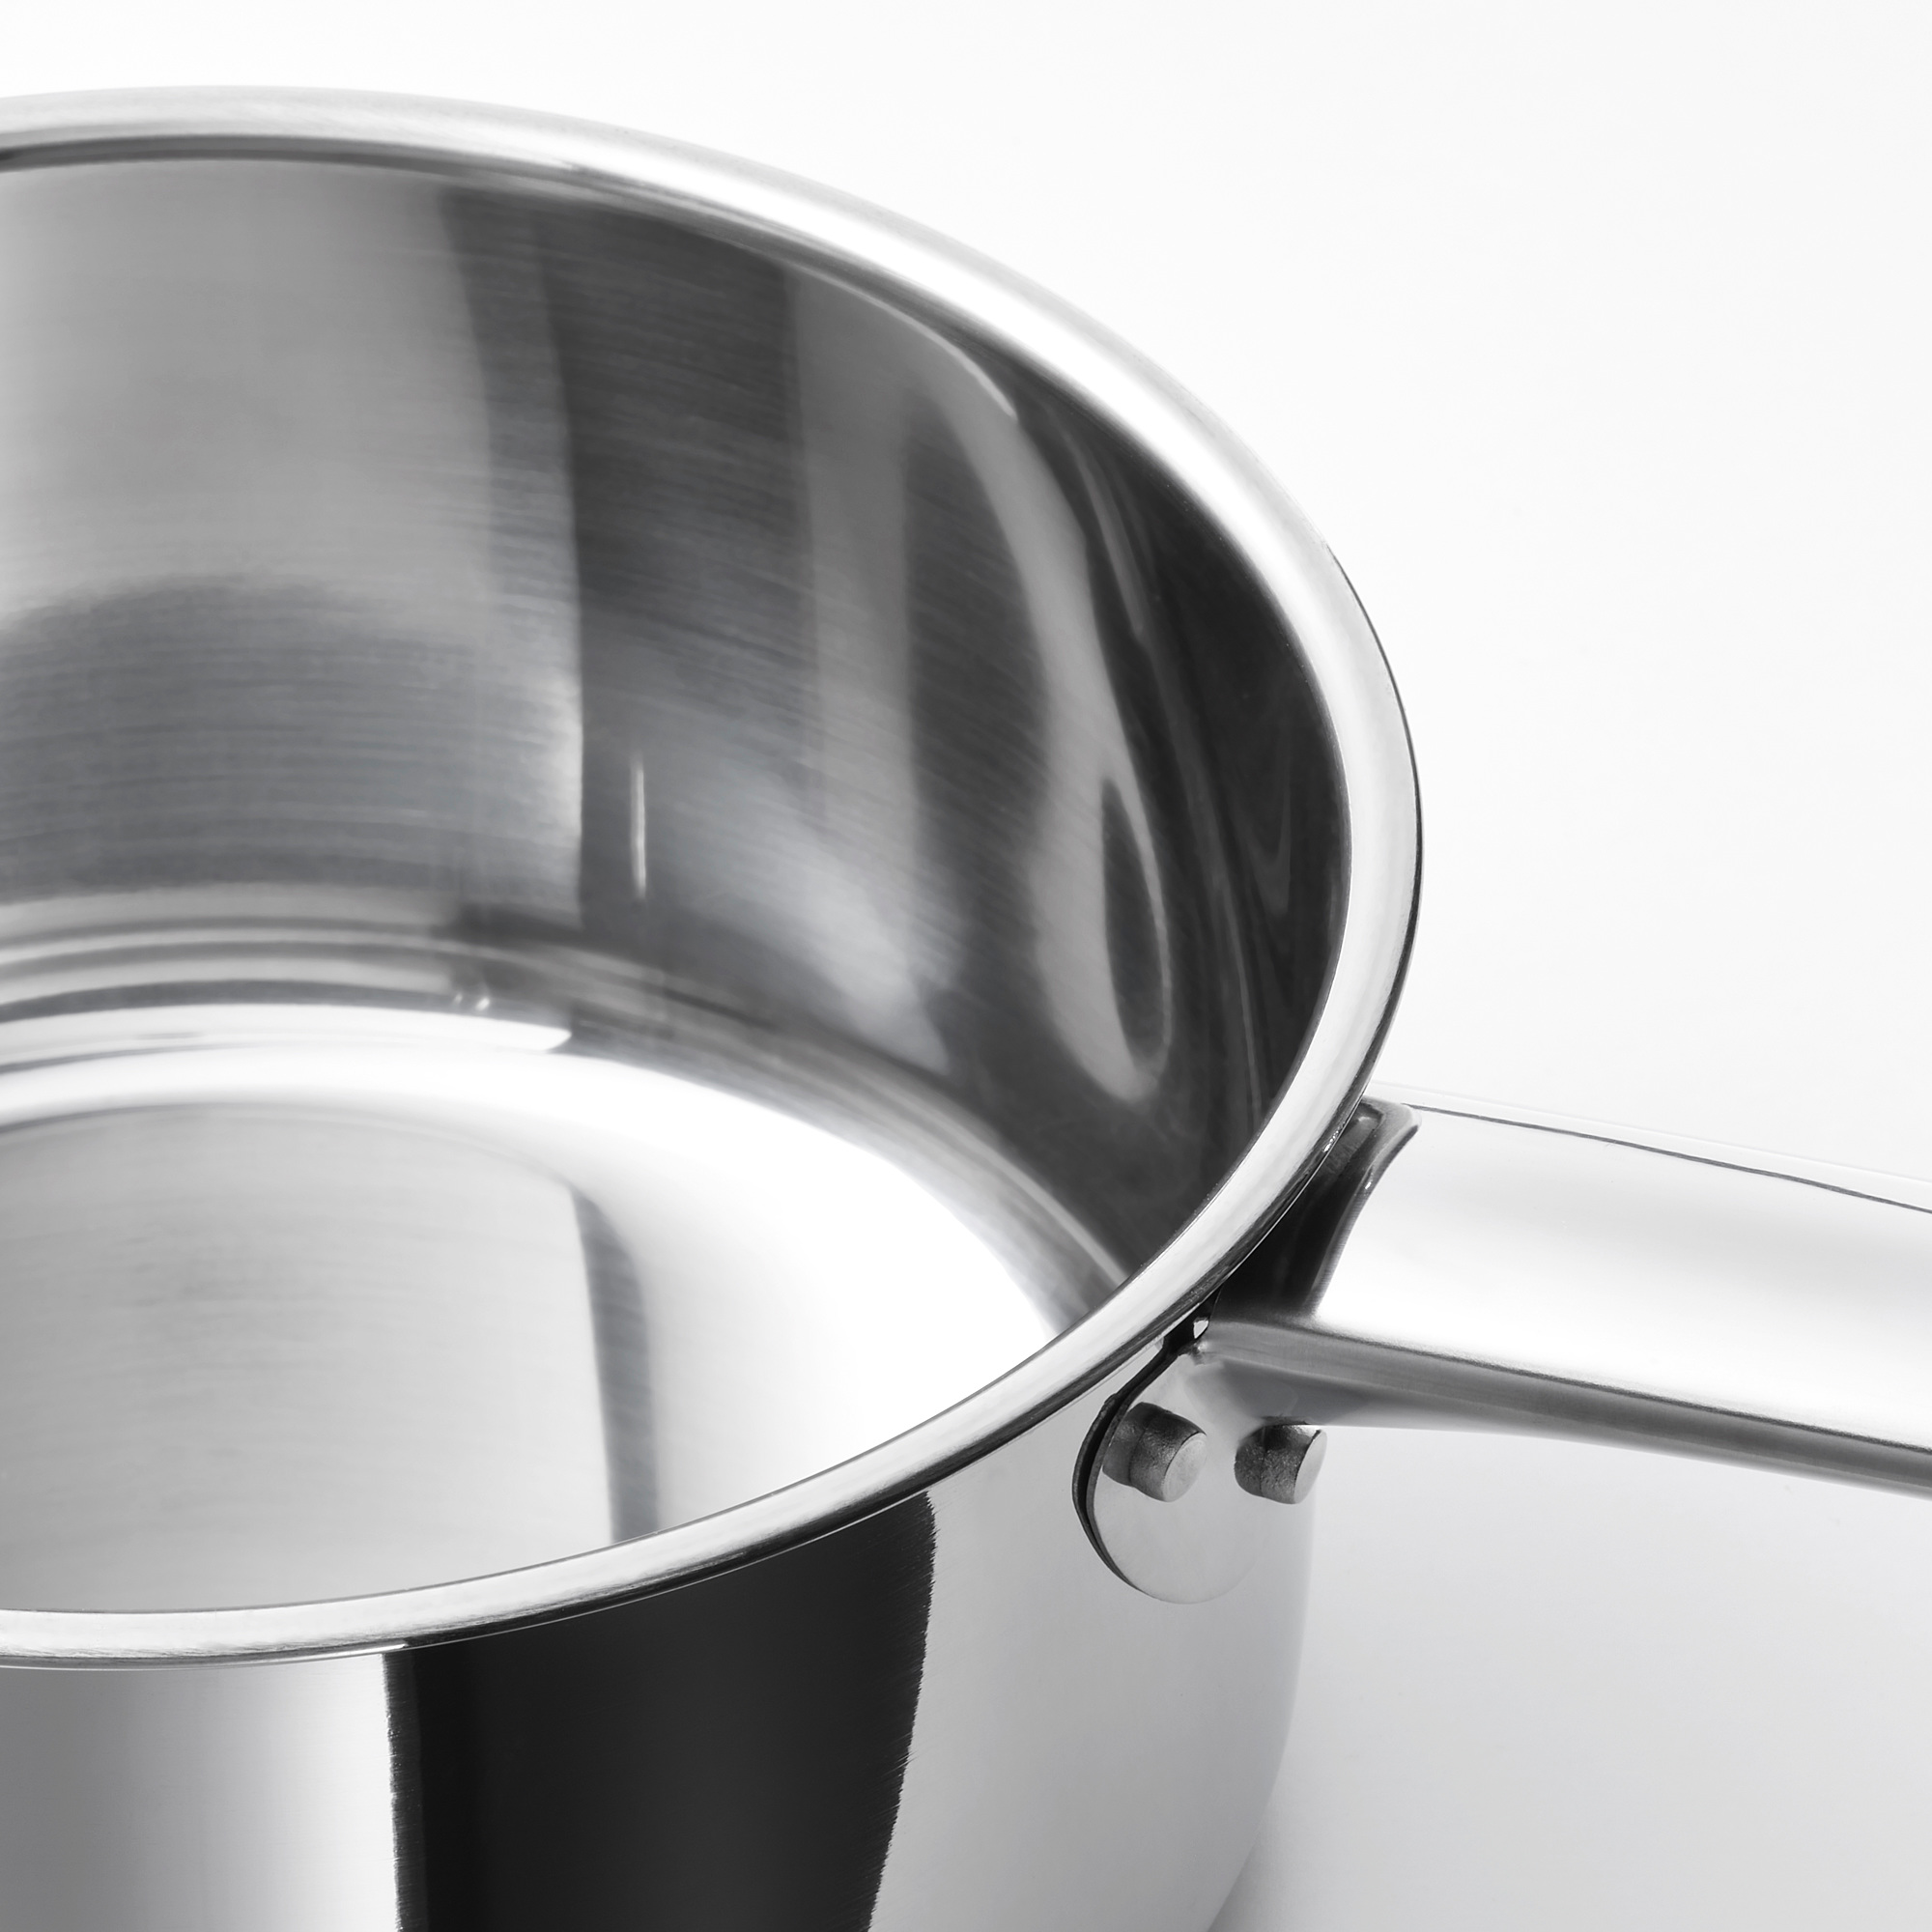 SENSUELL Frying pan, stainless steel, gray, Height: 2 Diameter